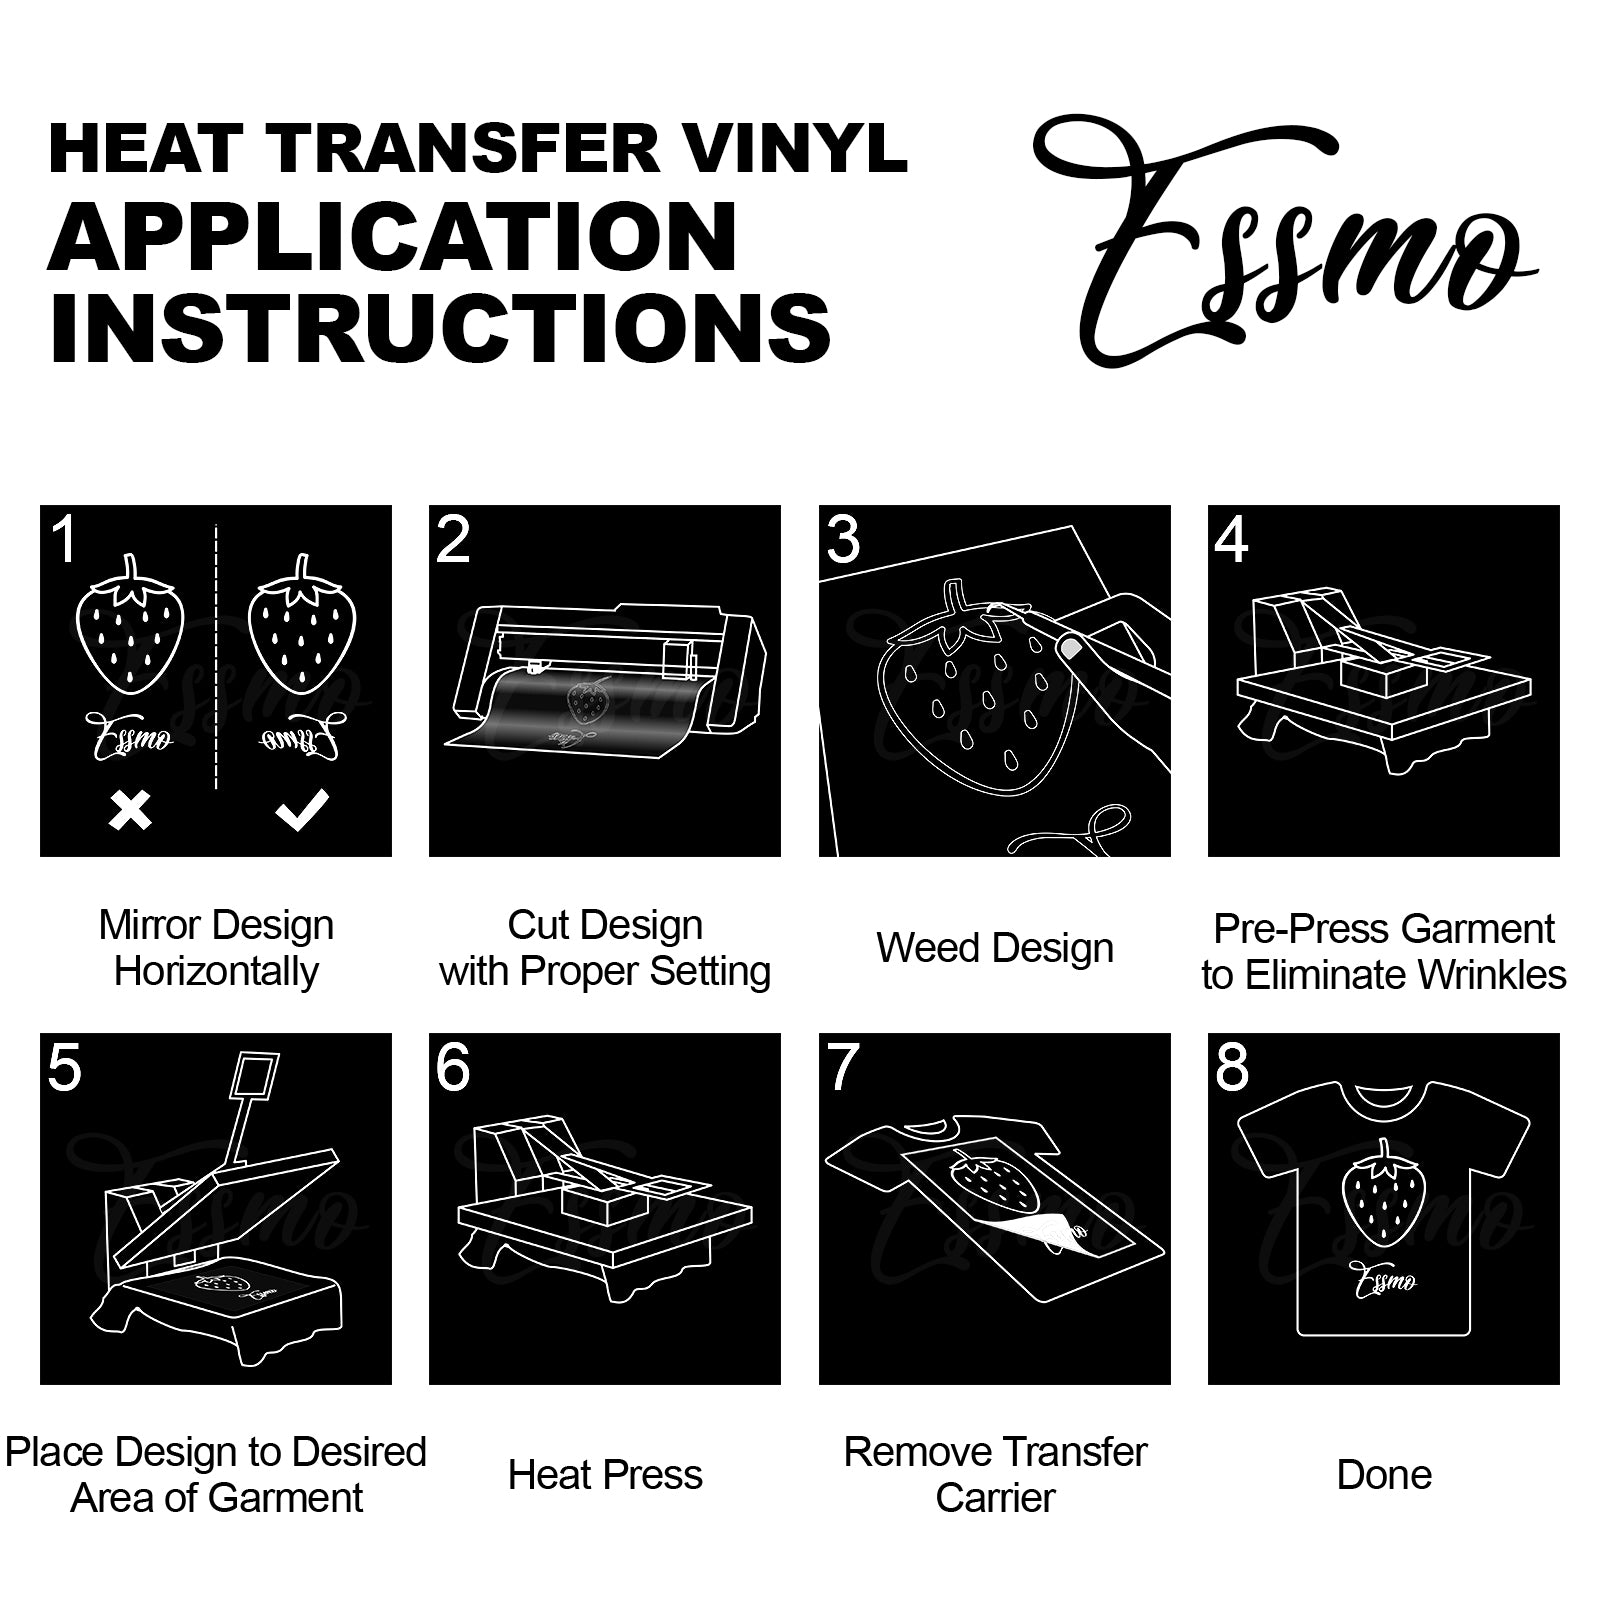 ESSMO™ Purple/Green Chameleon Color Change Heat Transfer Vinyl HTV